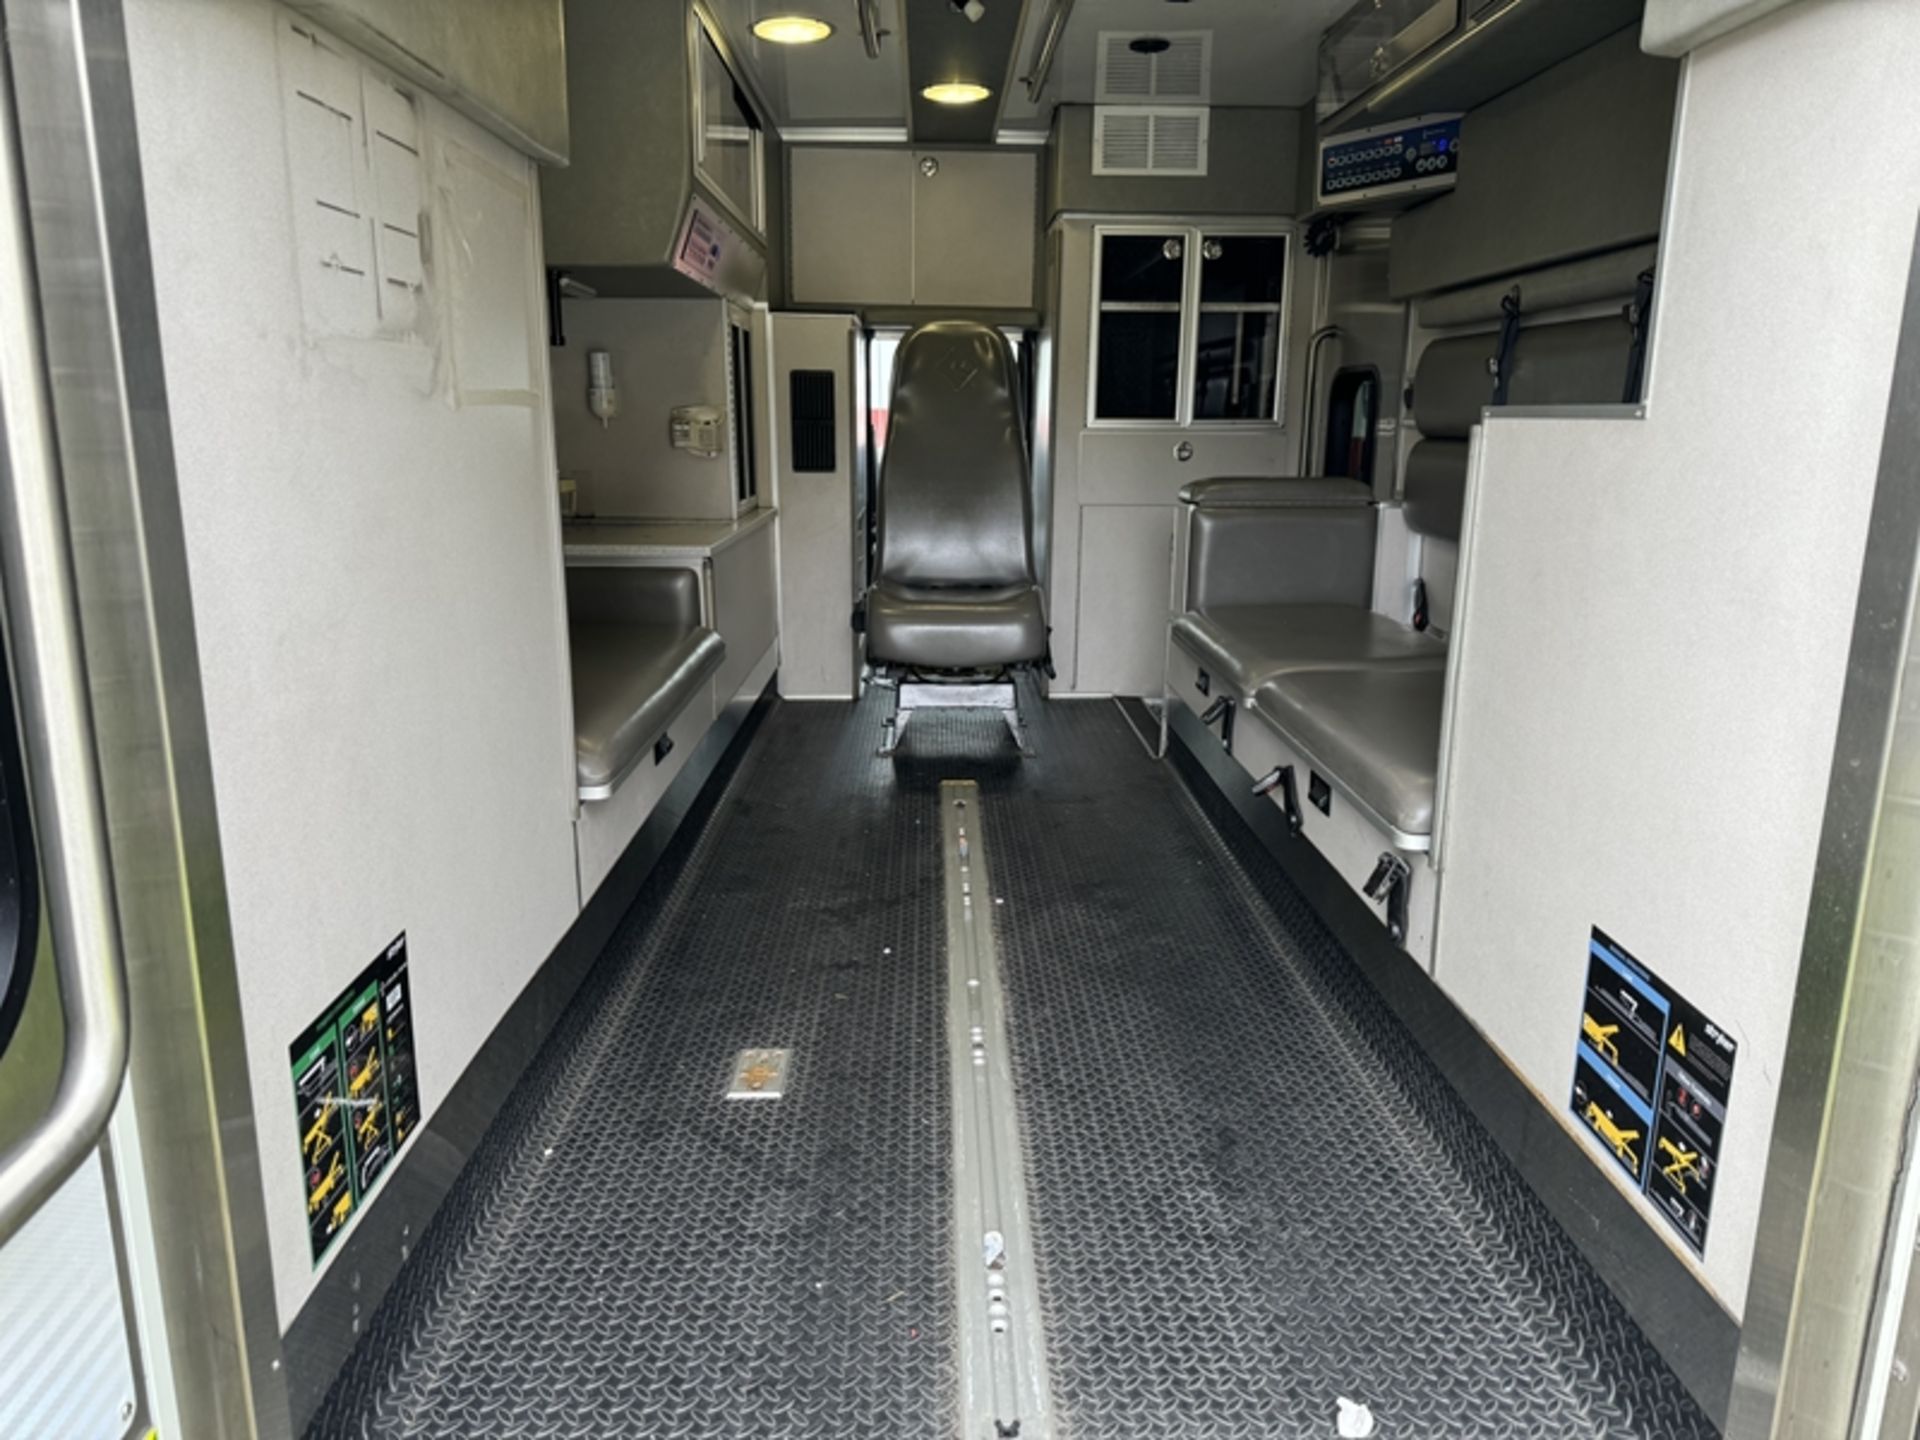 2012 INTERNATIONAL Ambulance MD, dsl - 181,378 miles showing - 3HAMYSKMXCL683303 - Image 6 of 6